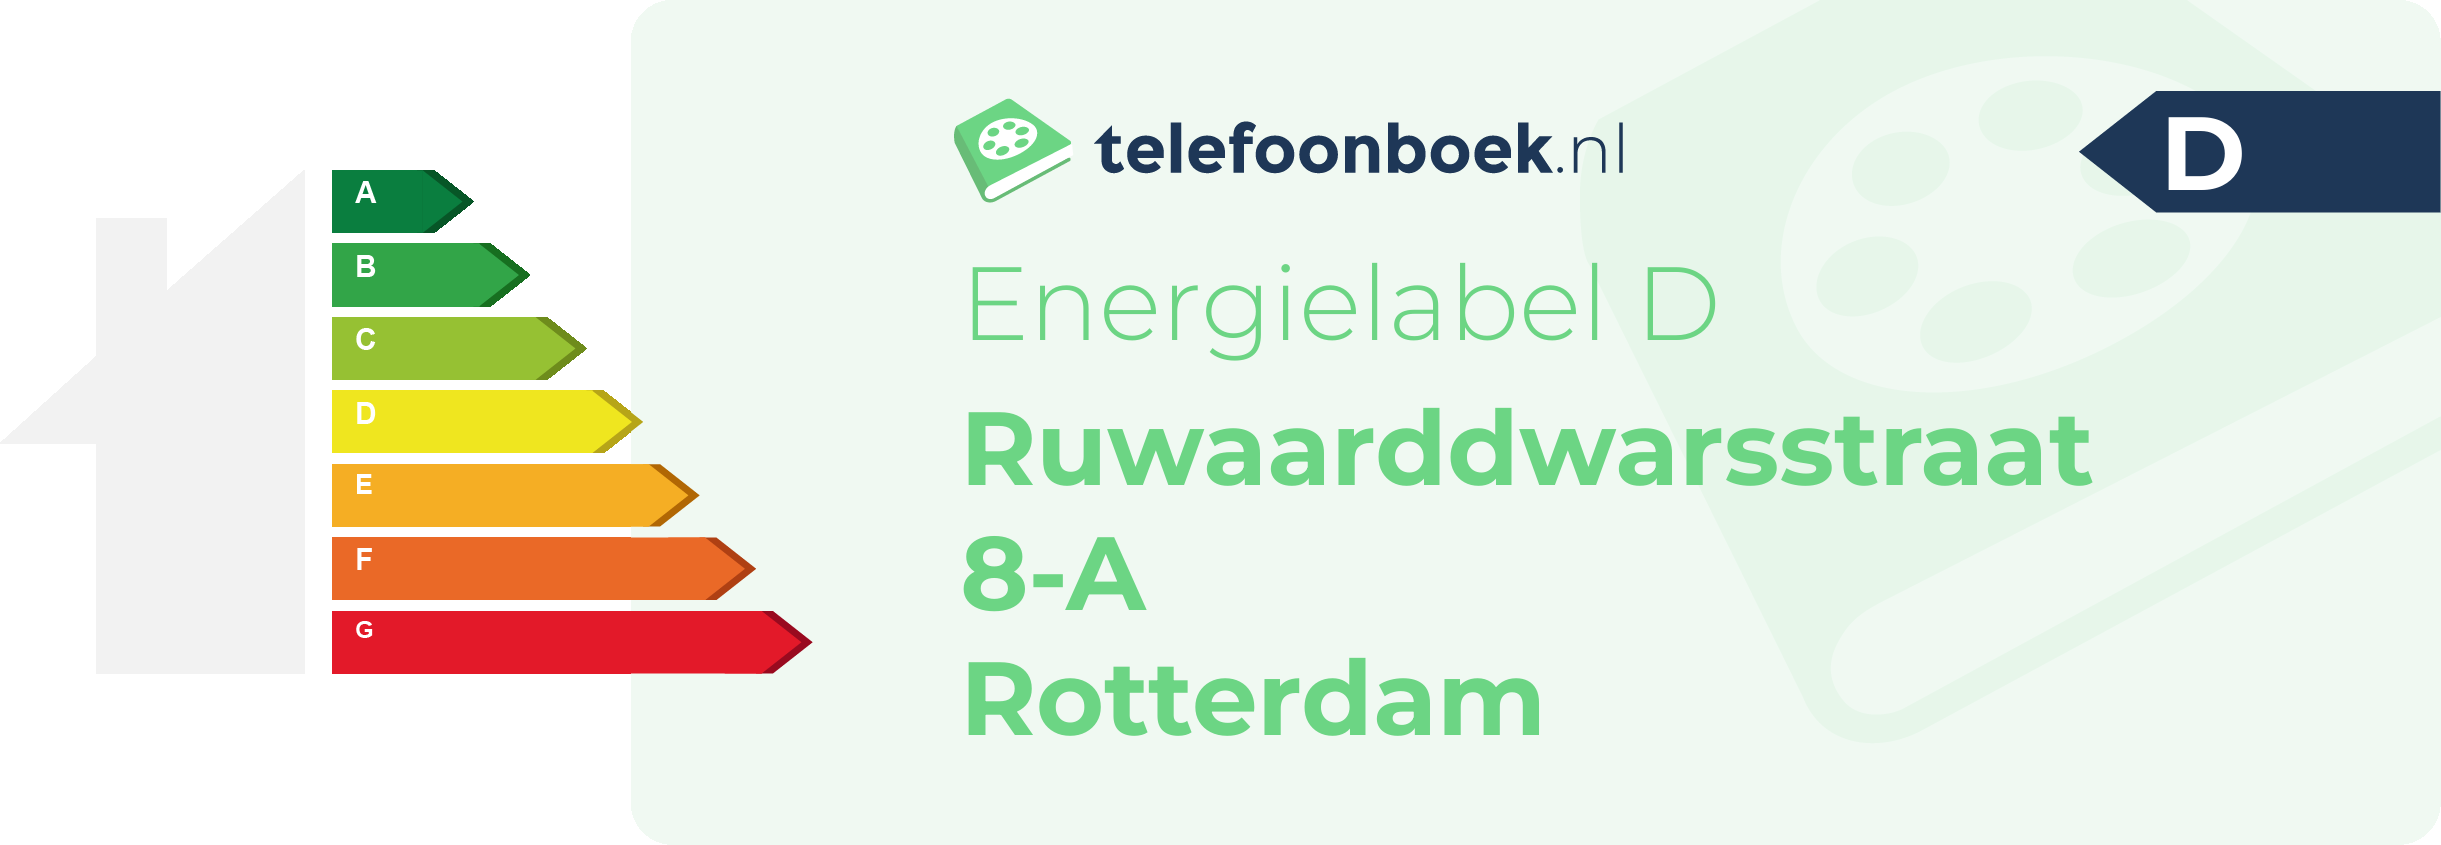 Energielabel Ruwaarddwarsstraat 8-A Rotterdam